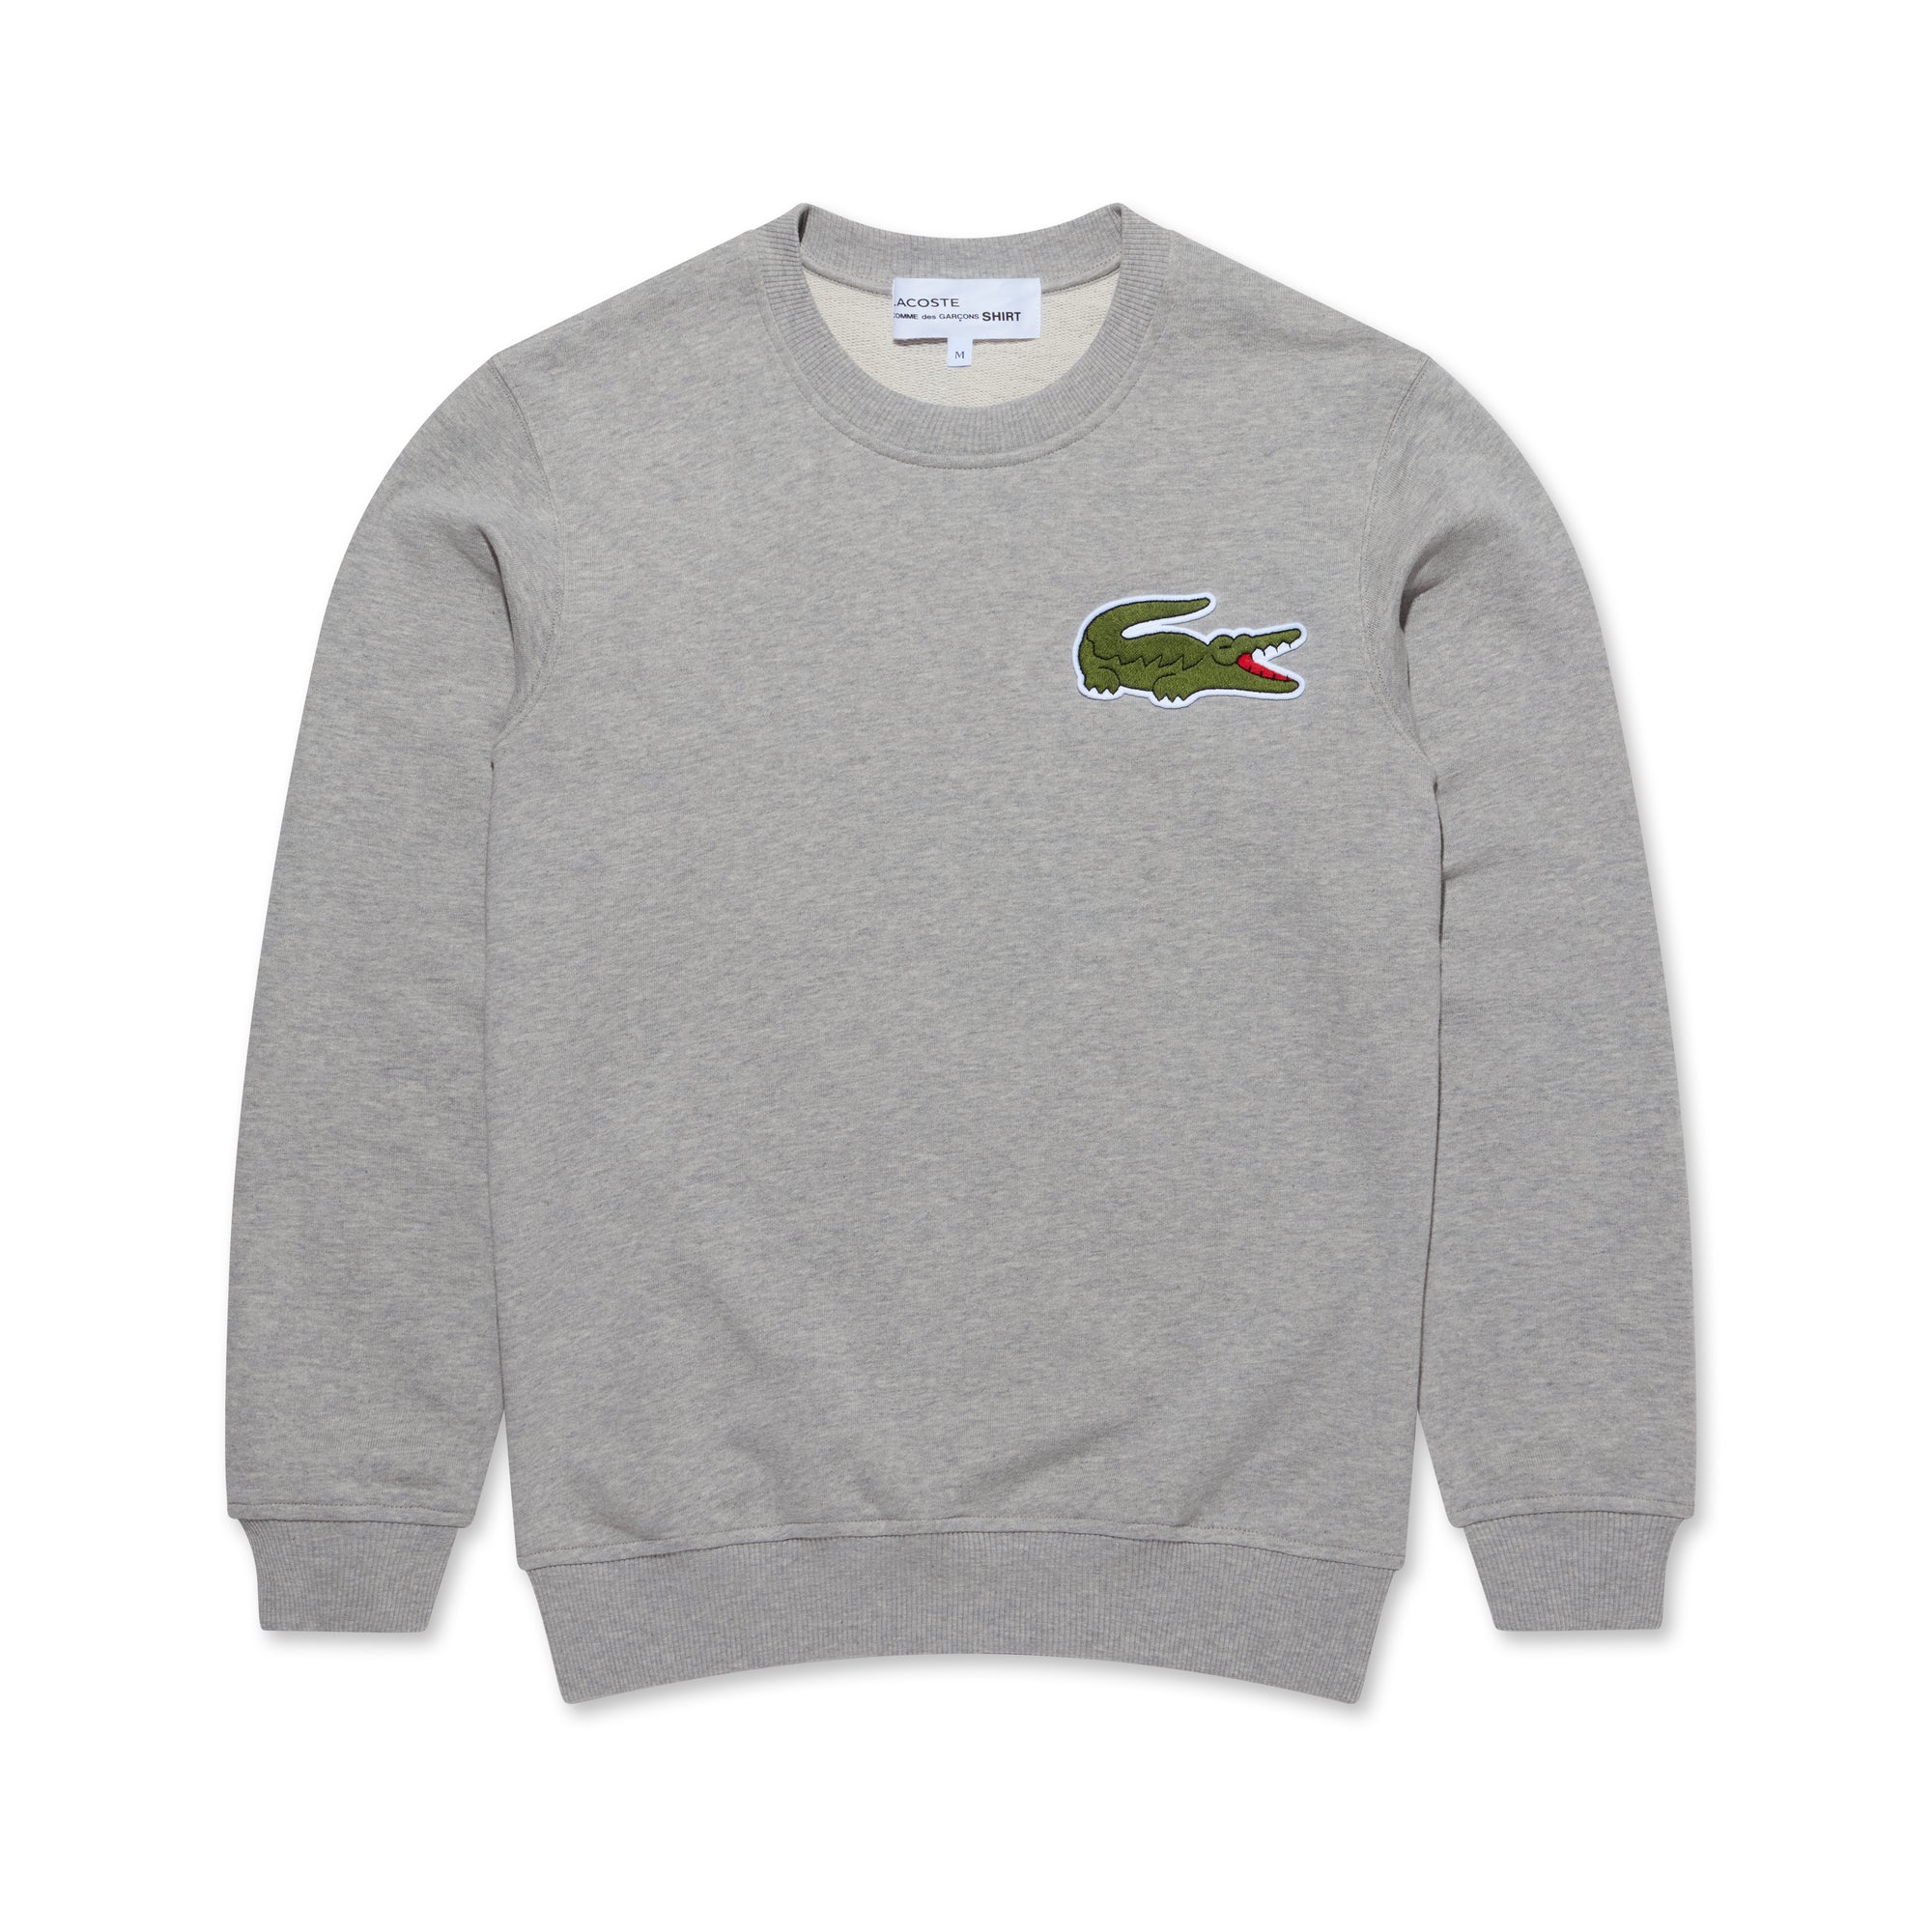 CDG Shirt - Lacoste Men's Cotton Sweatshirt - (Grey) view 5